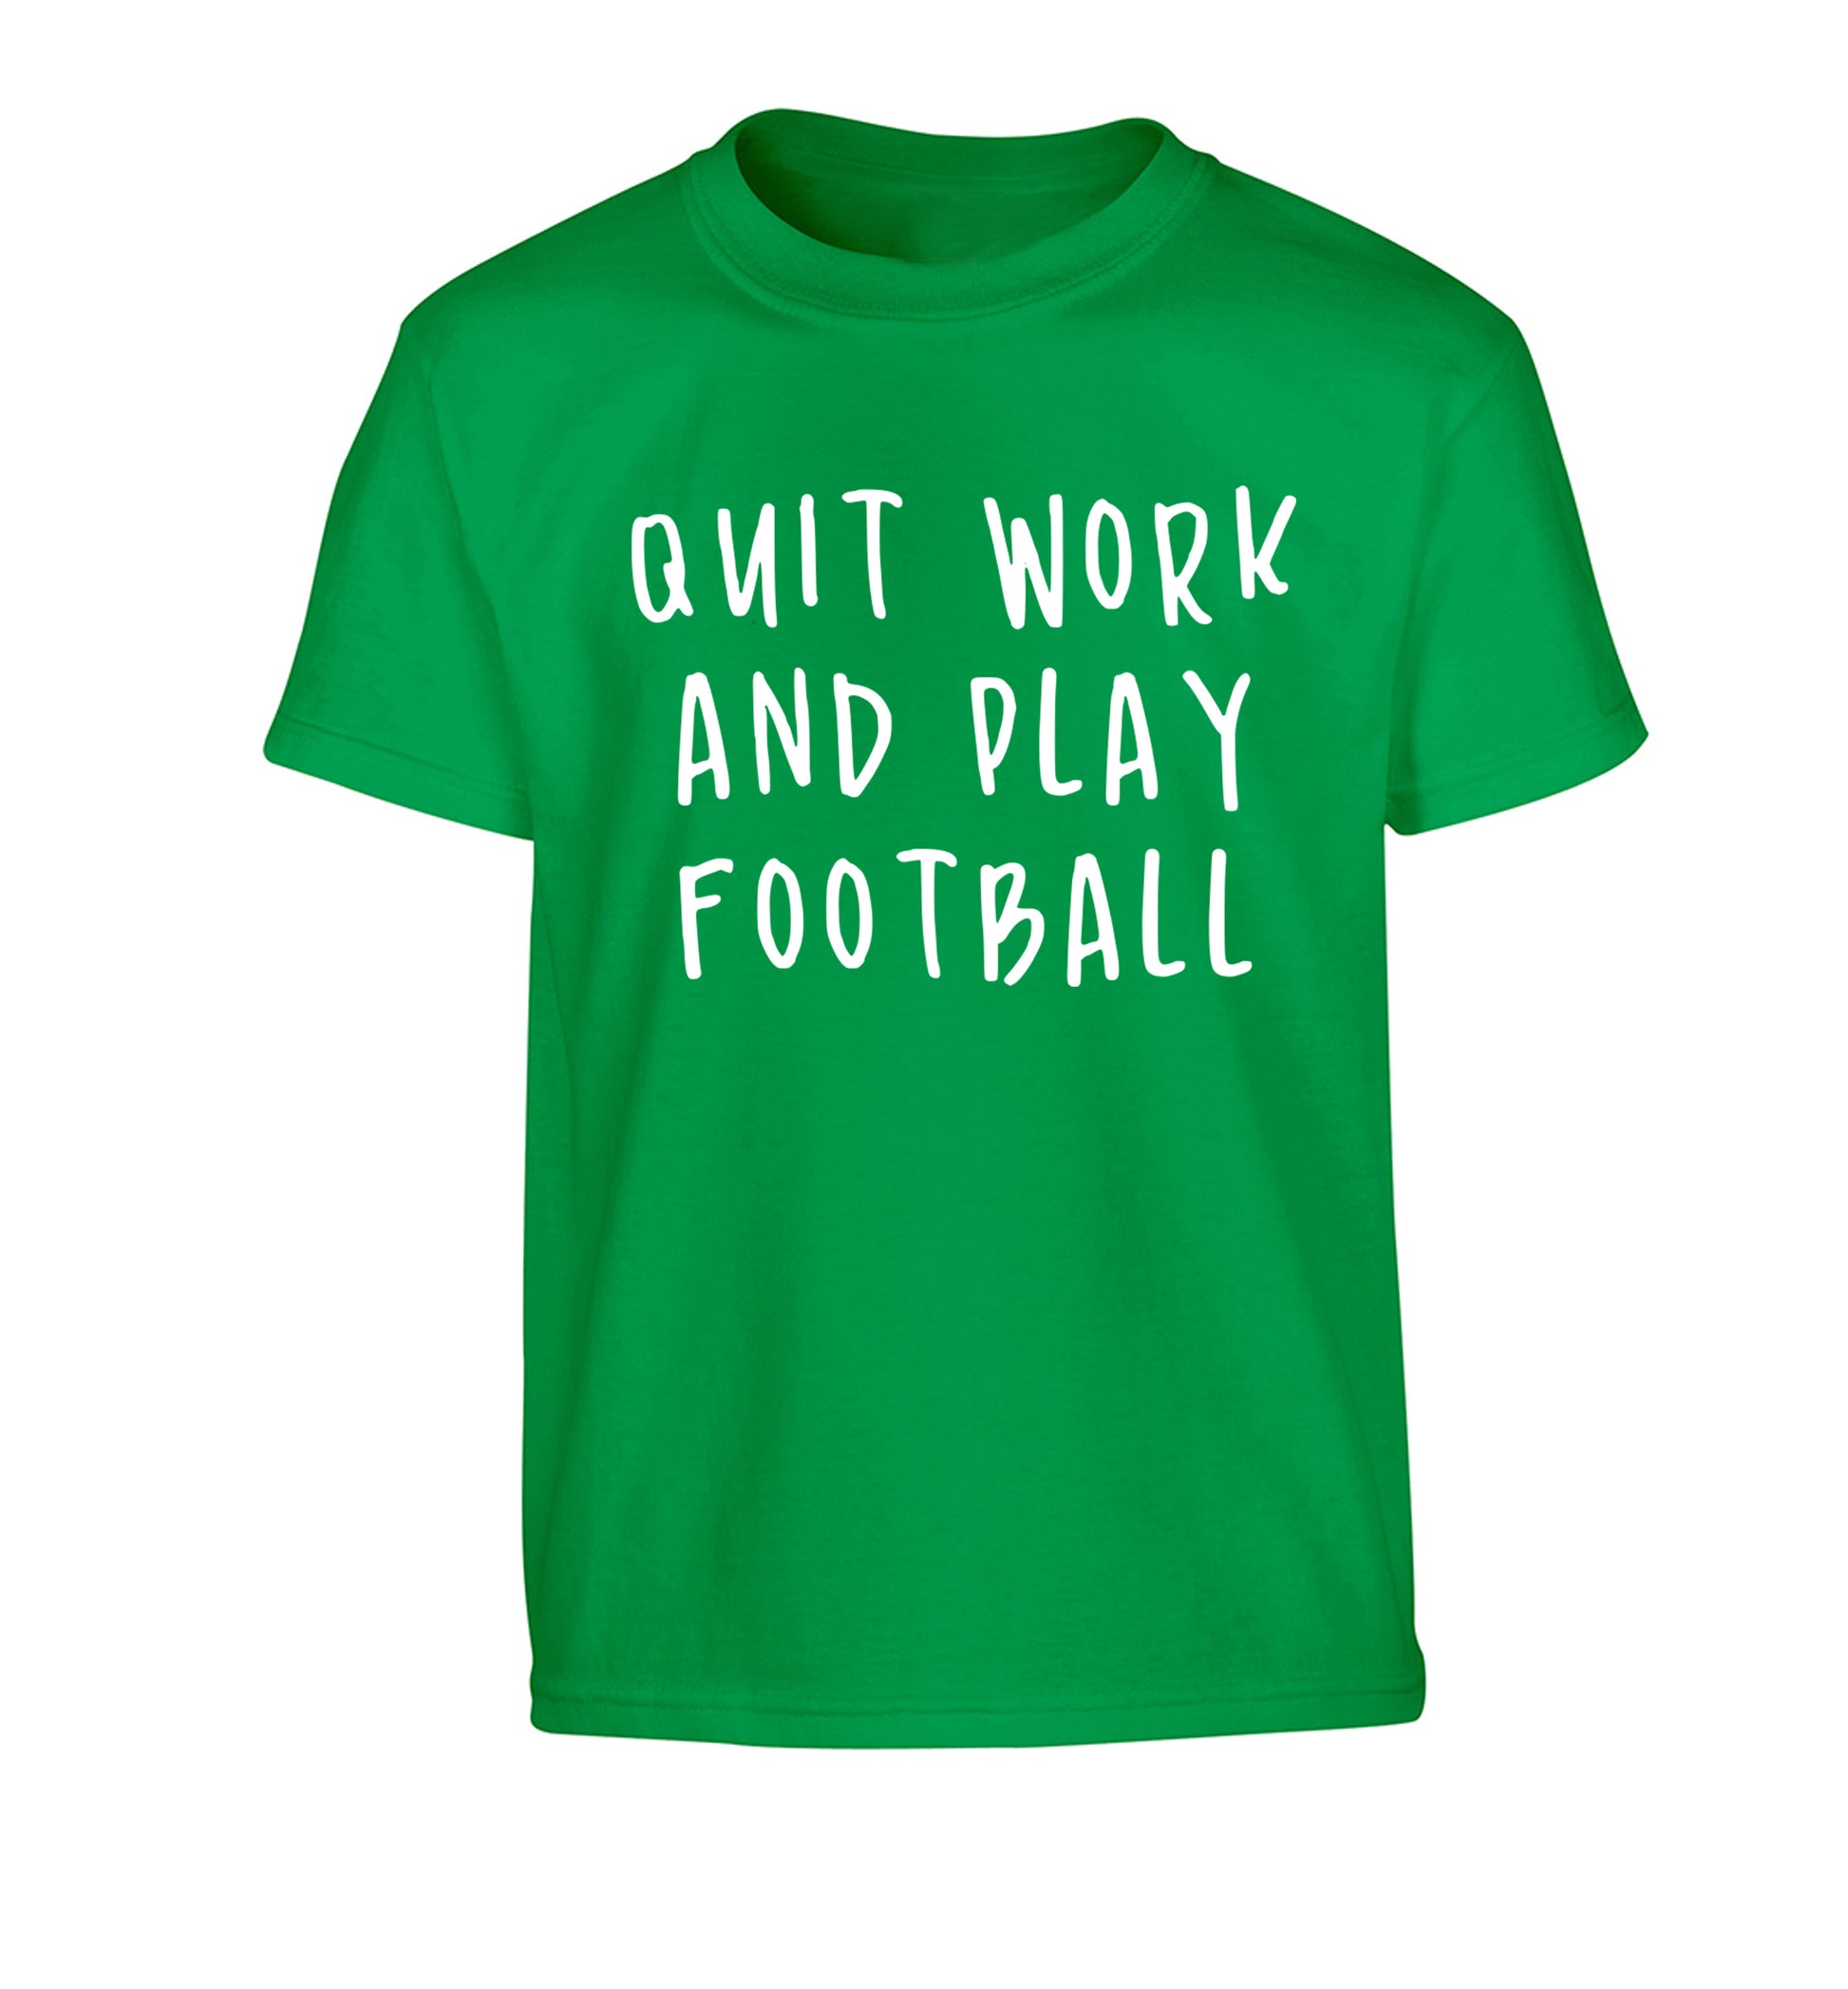 Quit work play football Children's green Tshirt 12-14 Years